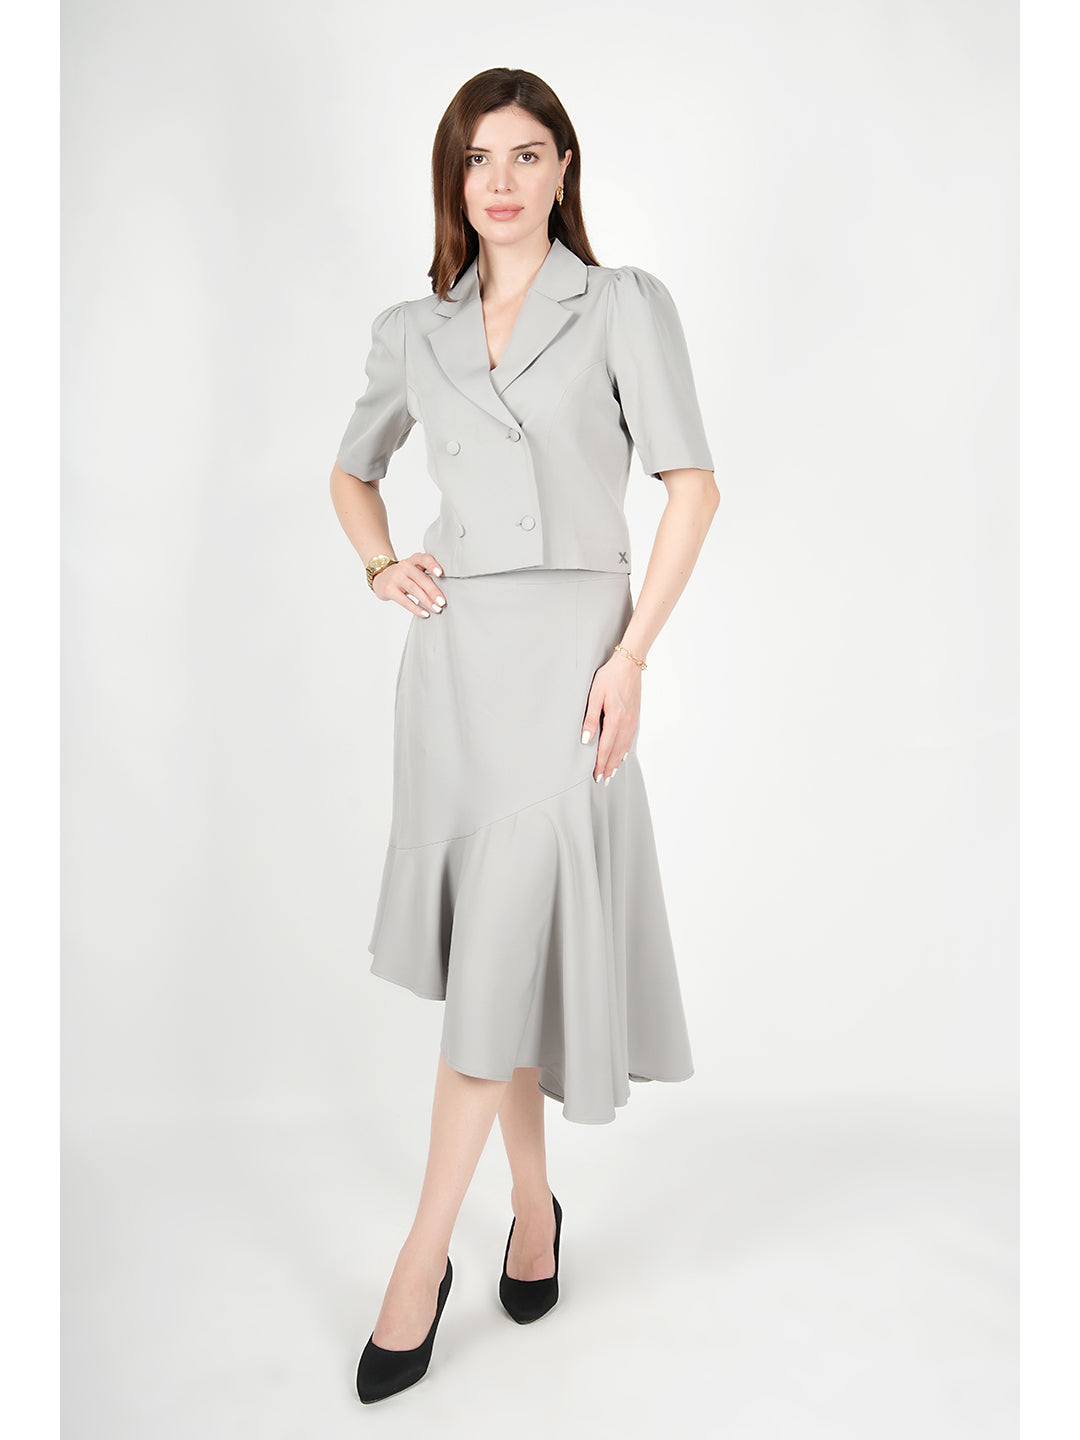 Exude Sunbeam Blazer Top with A-Symmetrical Skirt (Grey)